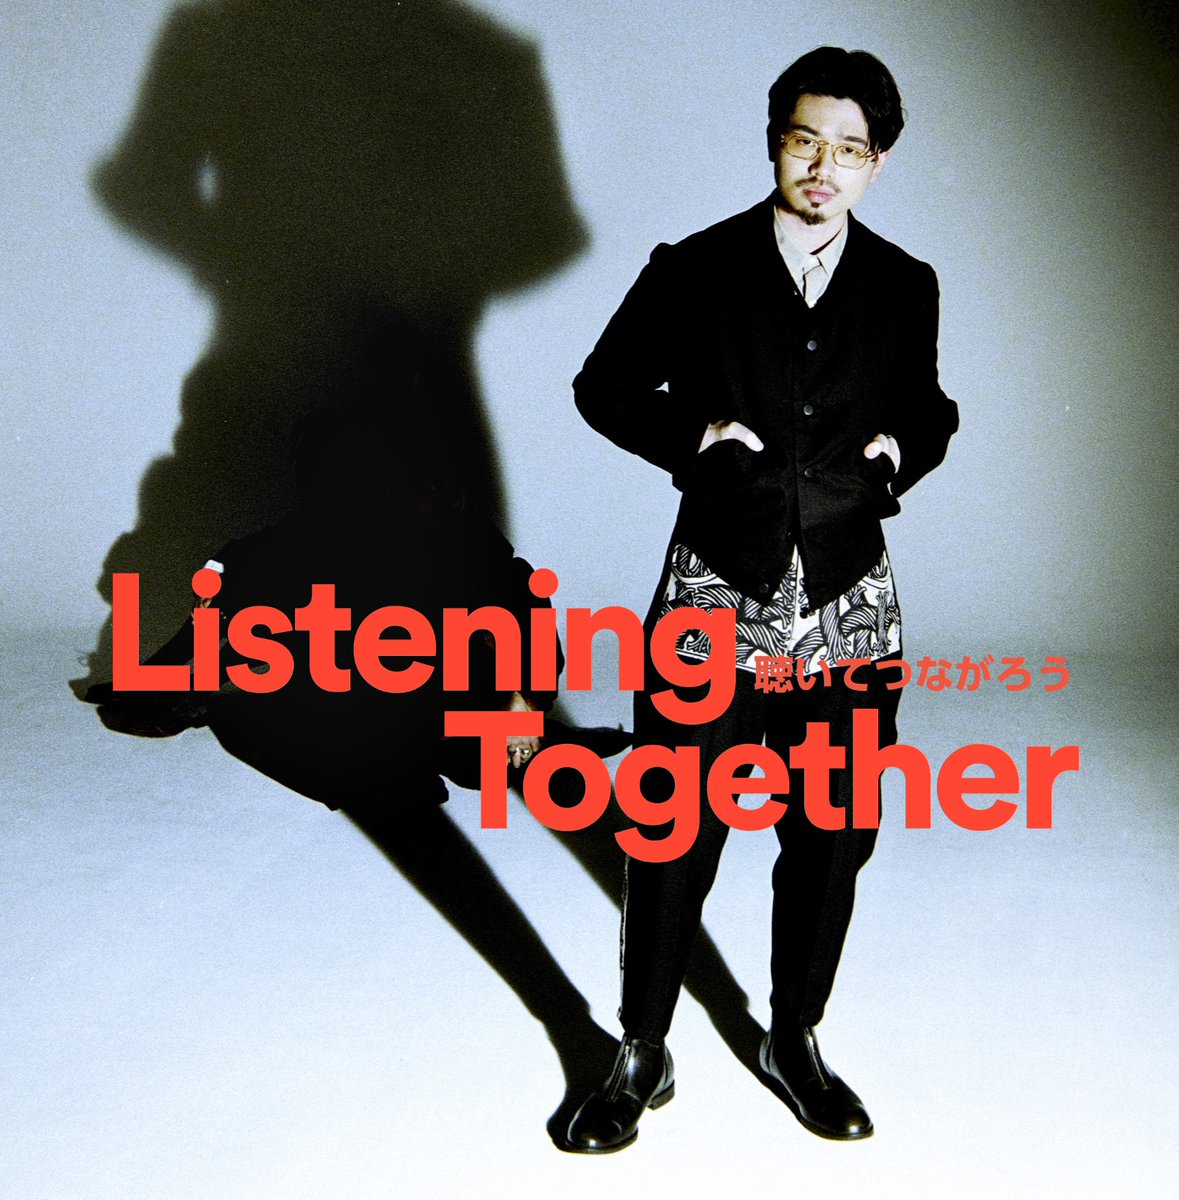 Spotifyにて「Listening Together #聴いてつながろう」Selected by ハマ･オカモトを公開しました！
是非、聴いてみて下さい！
open.spotify.com/playlist/4T149…

 #聴いてつながろう #ListeningTogether #OKAMOTOS